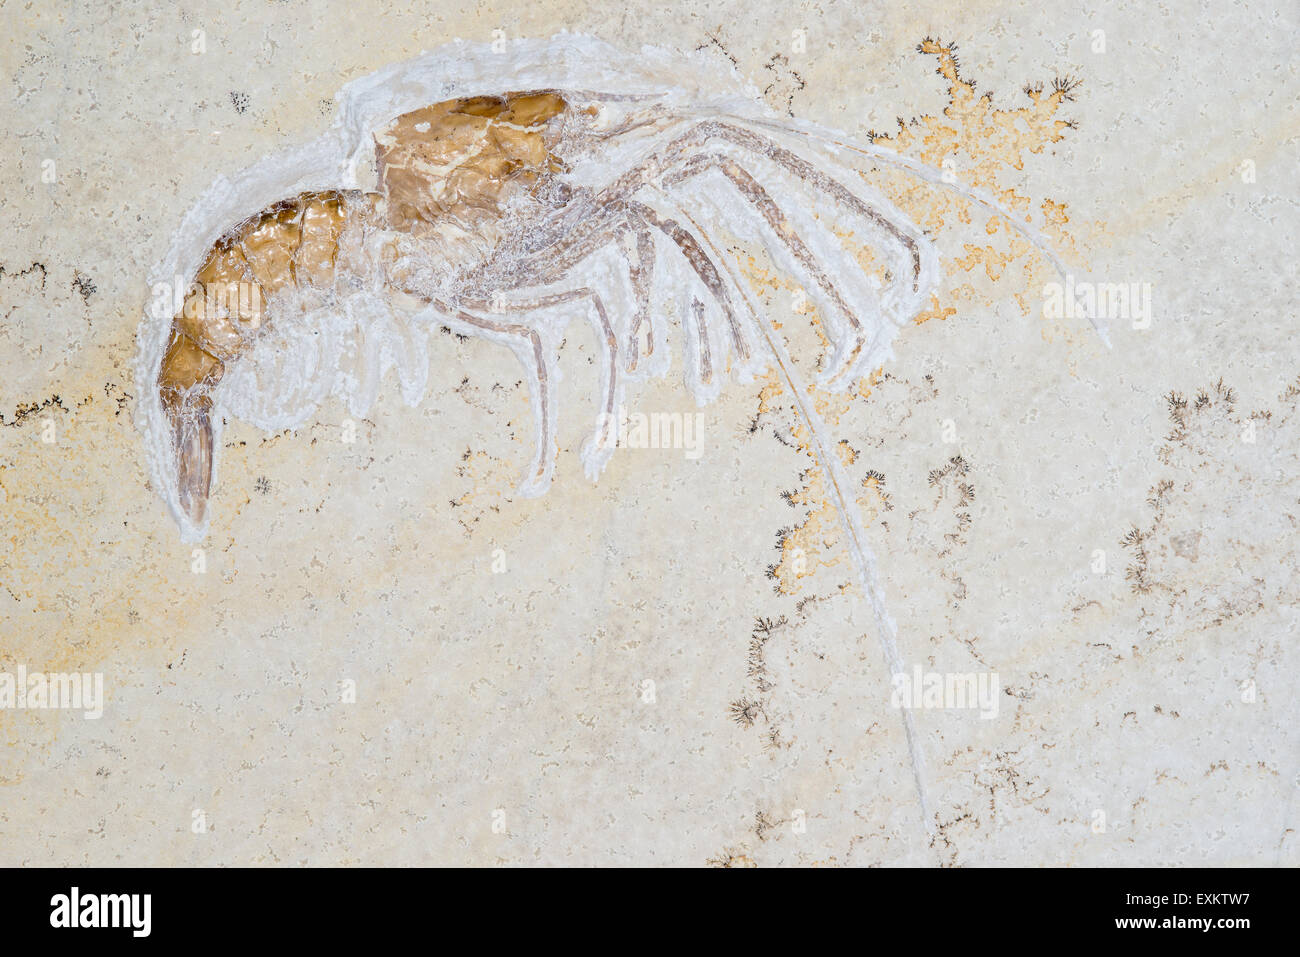 Fossil prawn (Aeger tipularius) and dendrites, White Jura, Zeta 2, find spot quarry Blumenberg, Eichstätt Stock Photo